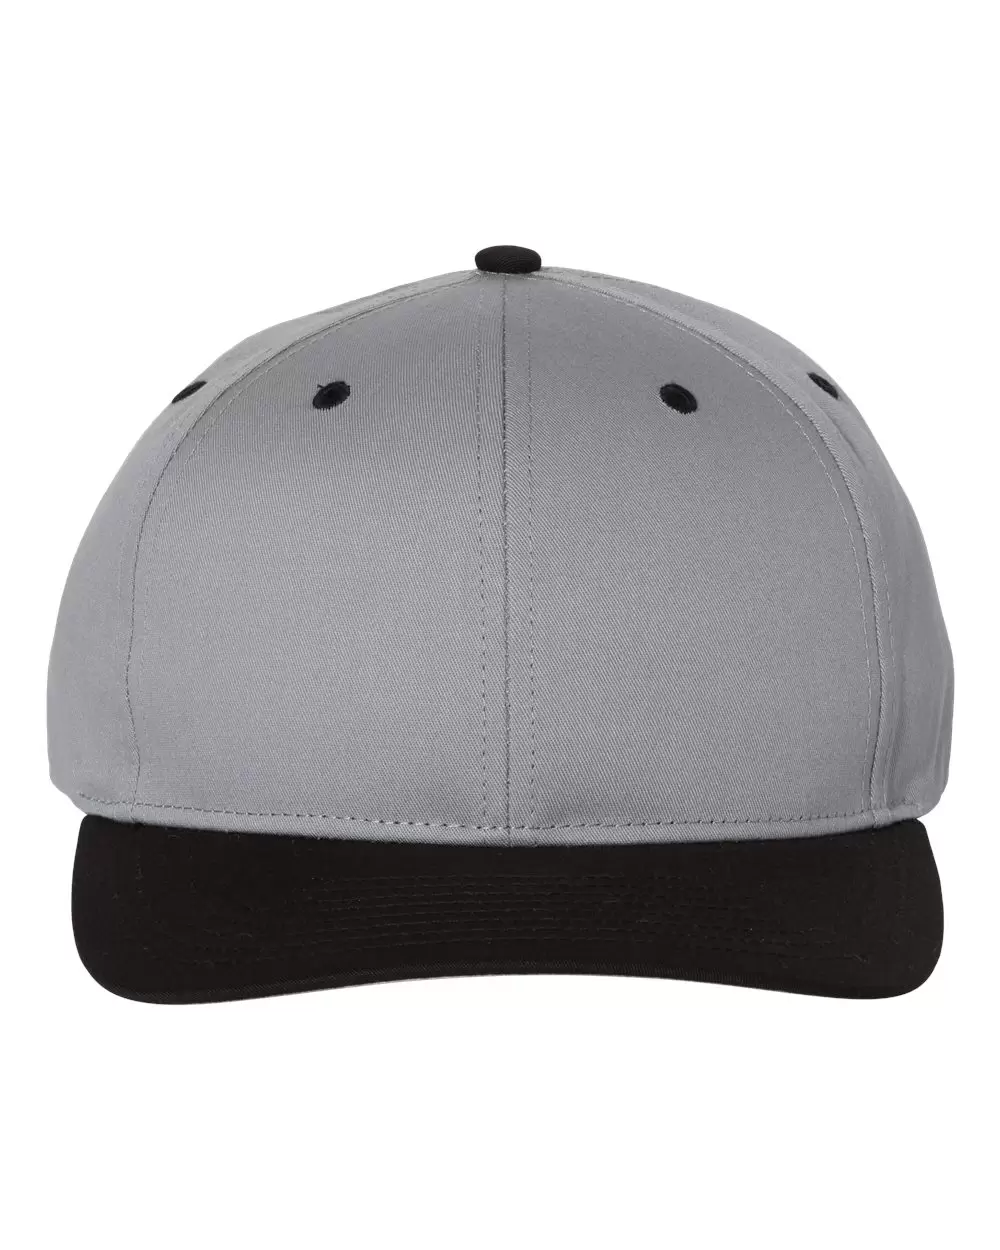 Richardson Hats 212 Pro Twill Snapback Cap - From